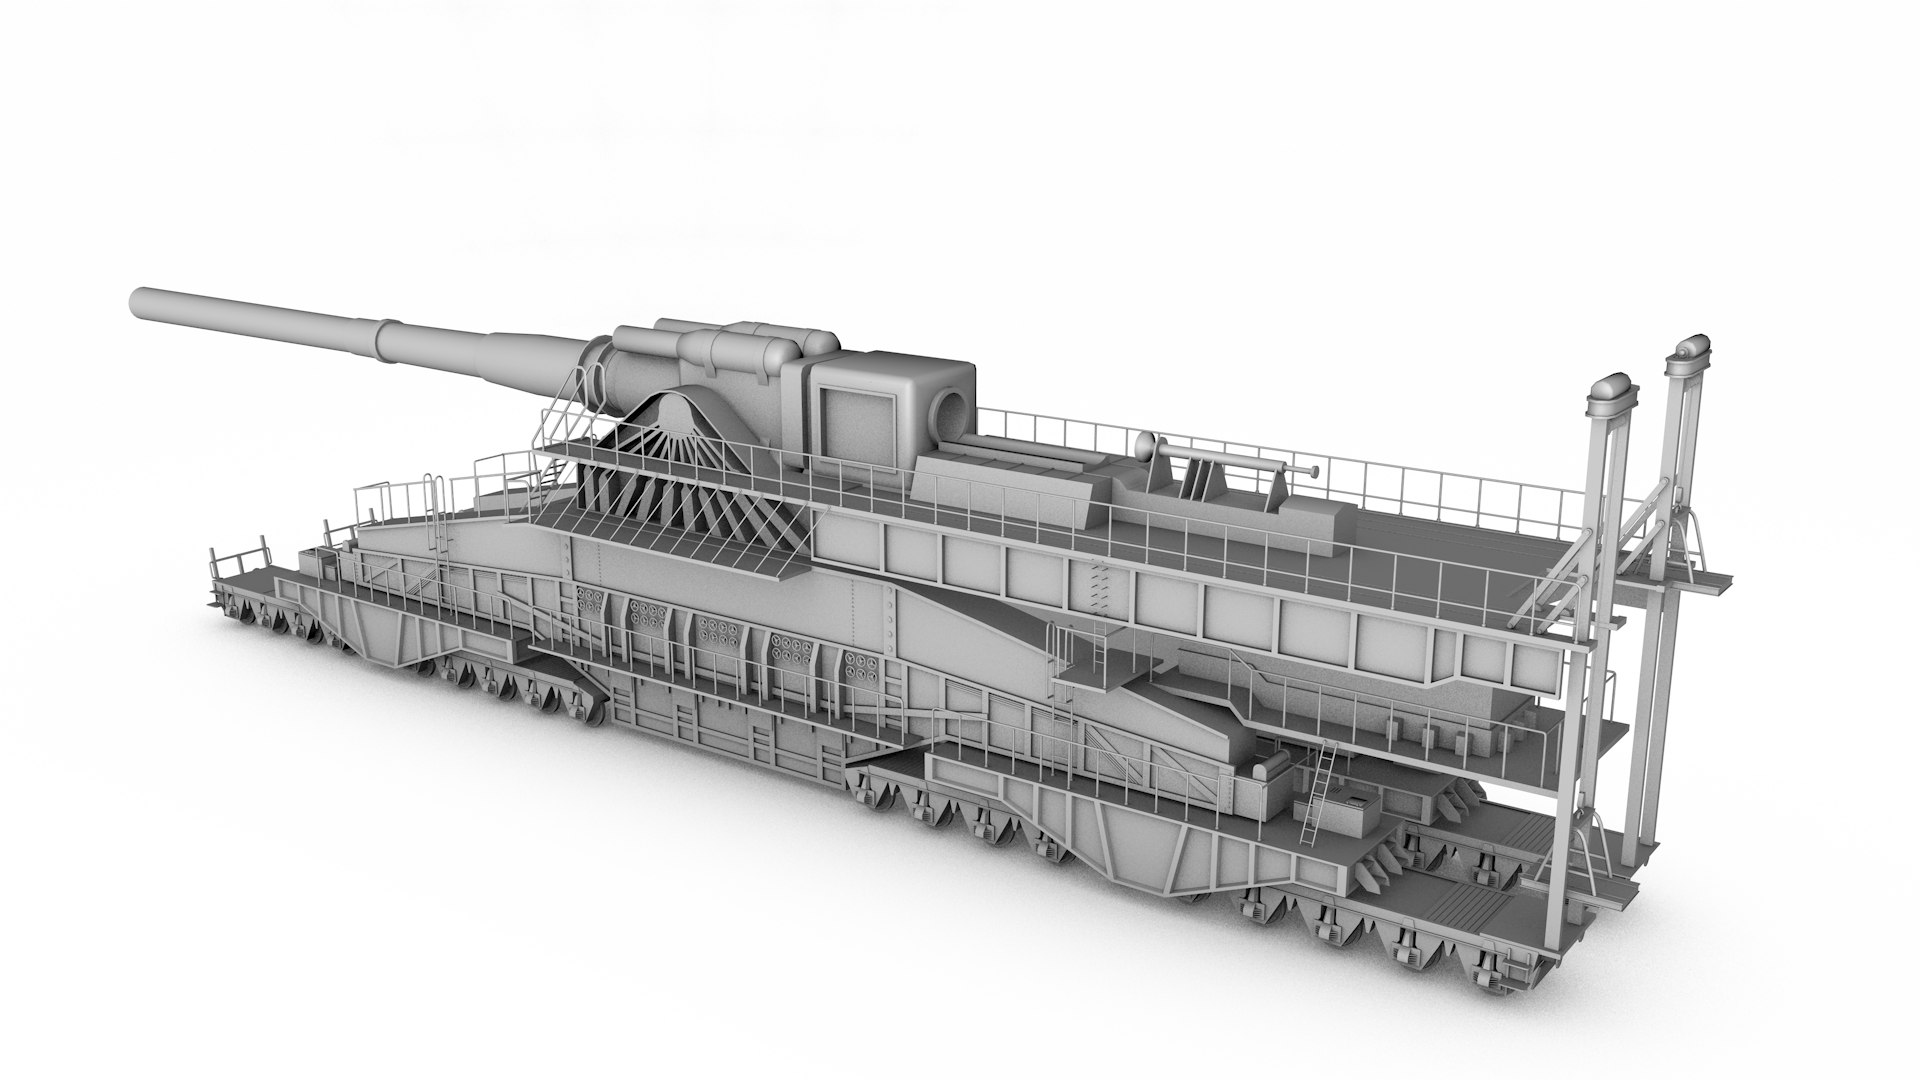 Blueprints > Trains > Trains R-S > Schwerer Gustav 80cm Kanone E